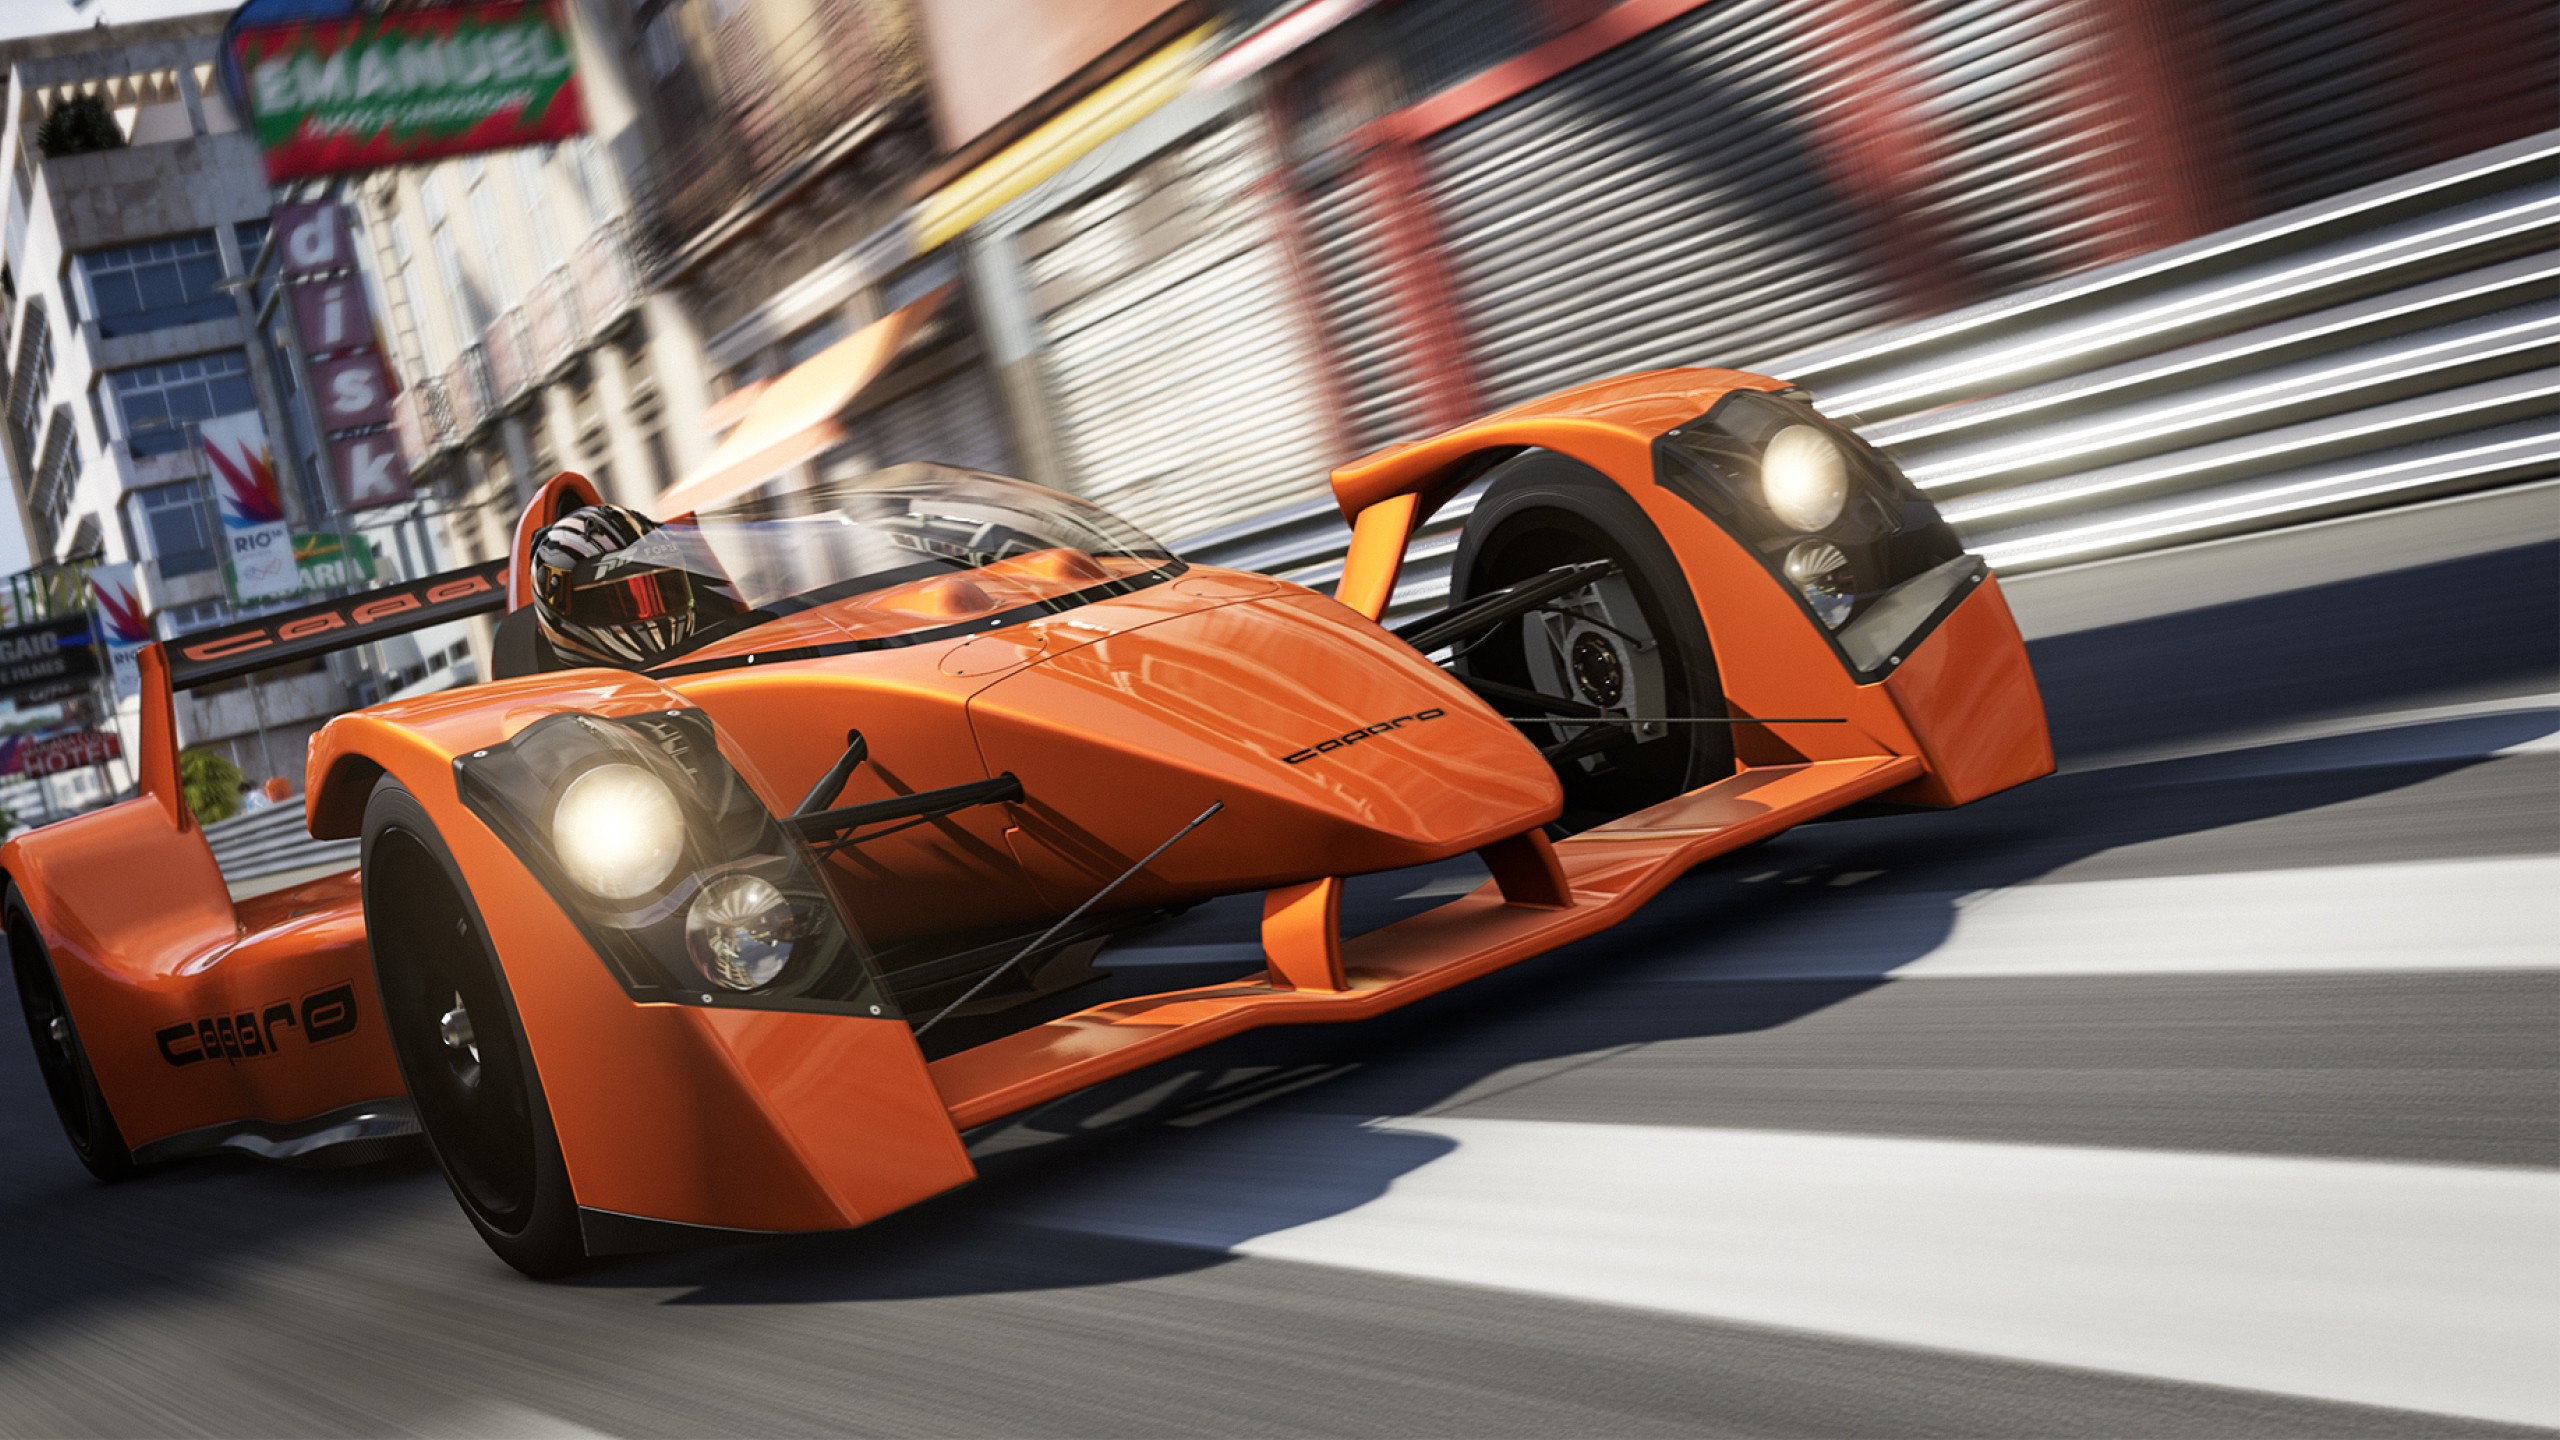 General 2560x1440 Forza Forza Motorsport 6 Caparo T1 Turn 10 Studios video games racing car race cars vehicle orange cars